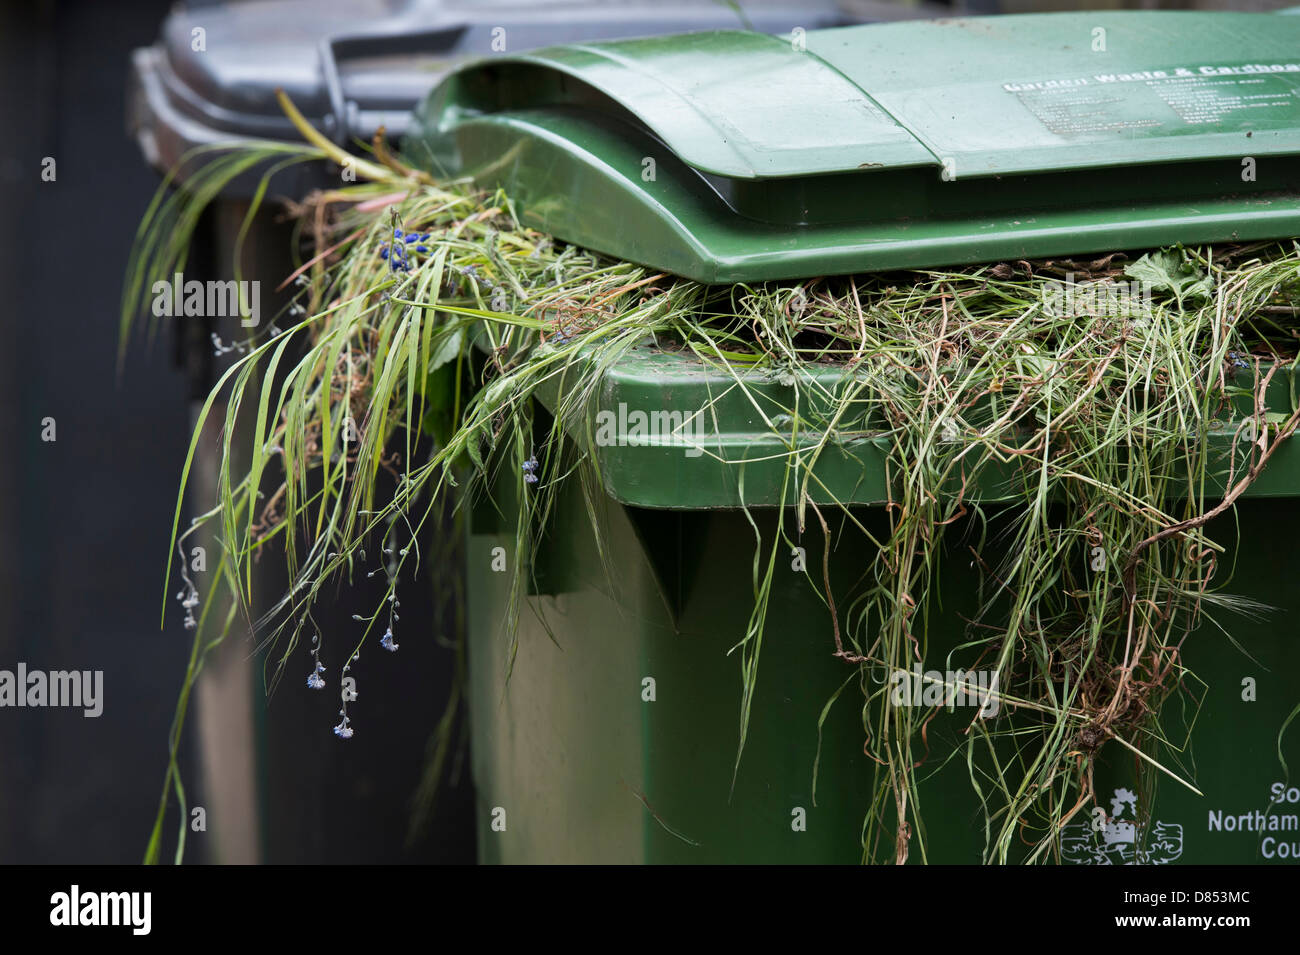 Garden waste in a green wheelie bin. England Stock Photo